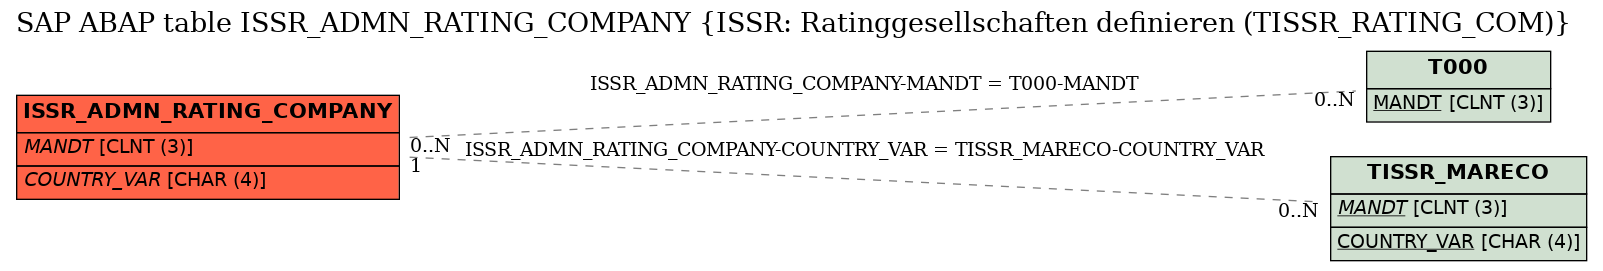 E-R Diagram for table ISSR_ADMN_RATING_COMPANY (ISSR: Ratinggesellschaften definieren (TISSR_RATING_COM))